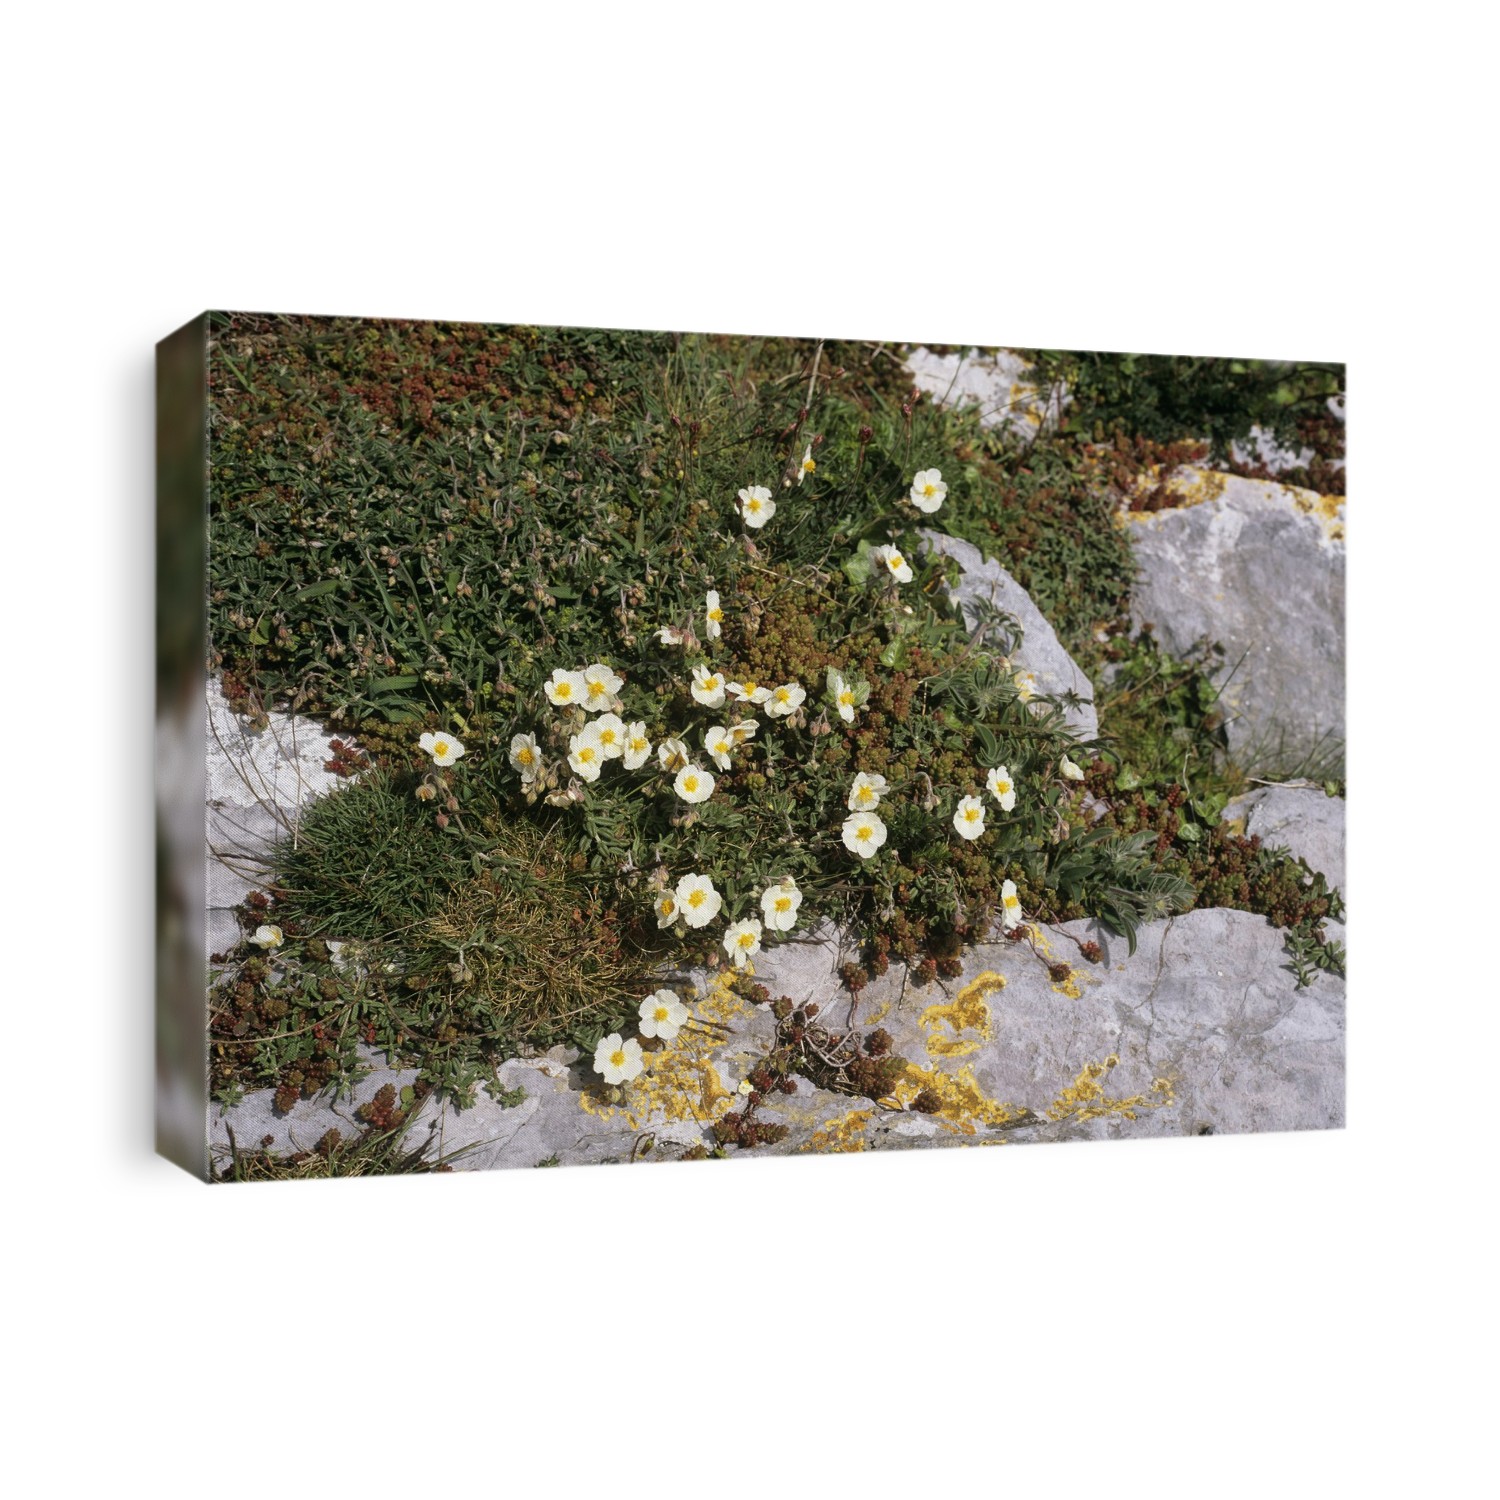 White rock-rose flowers (Helianthemum apenninum). Photographed at Berry Head, south Devon, UK.